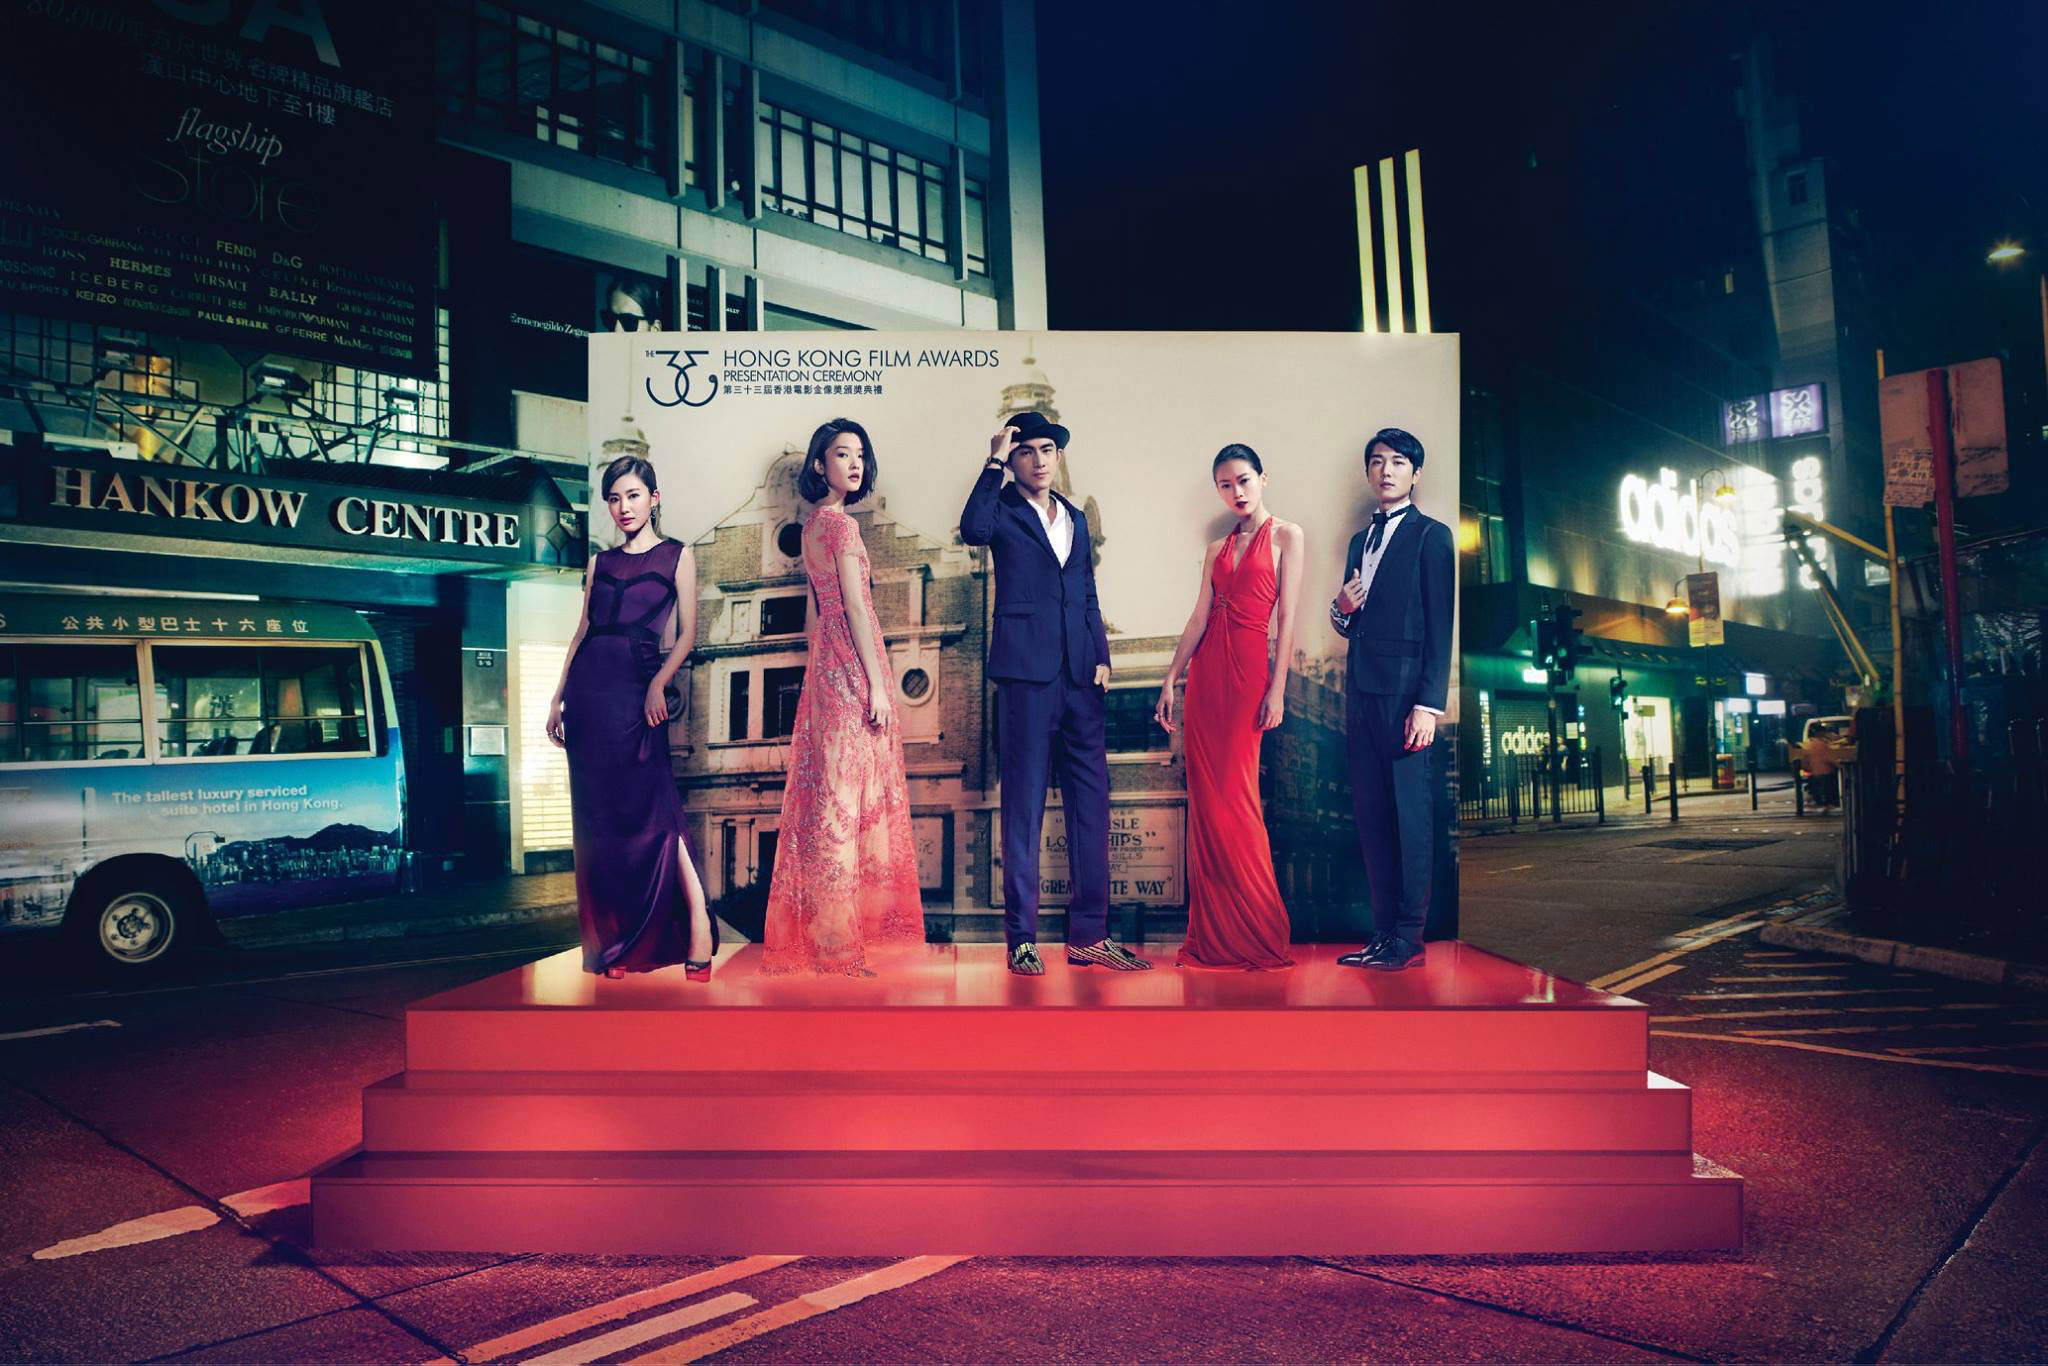 Hong Kong Film Awards 2014 best newcomer nominees